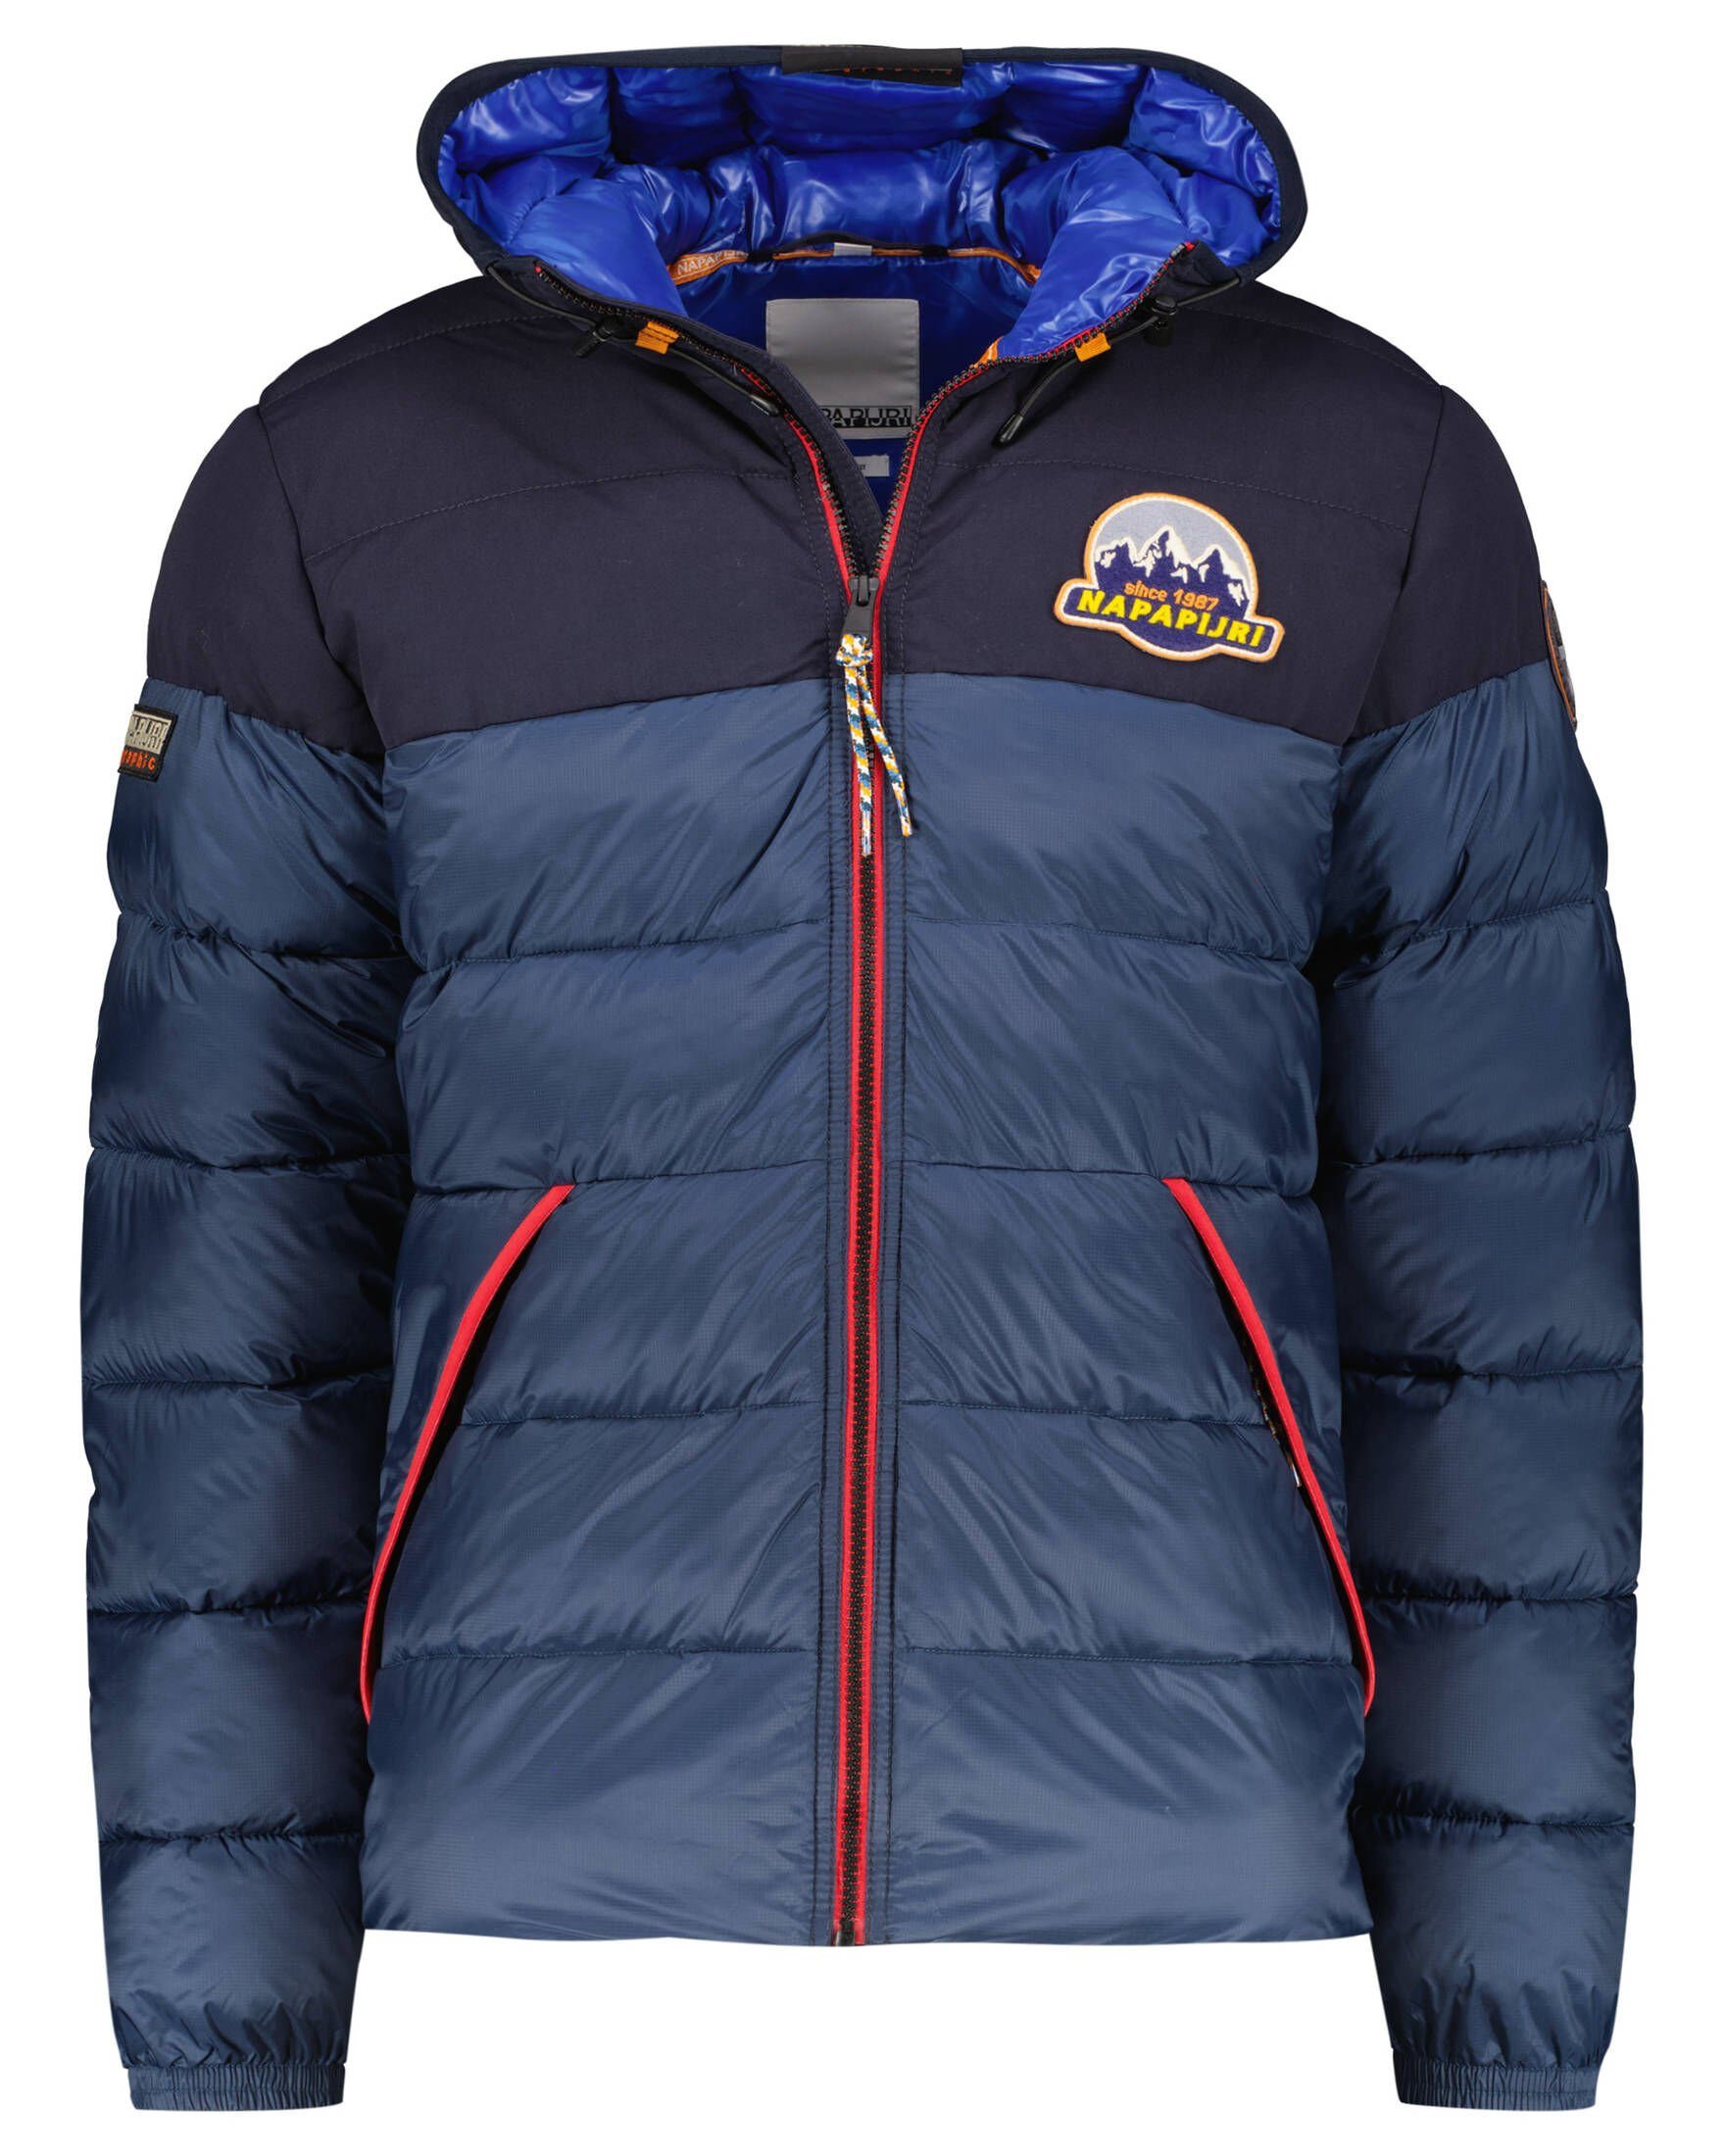 Napapijri Winterjacke, Zweifarbige Jacke online kaufen | OTTO